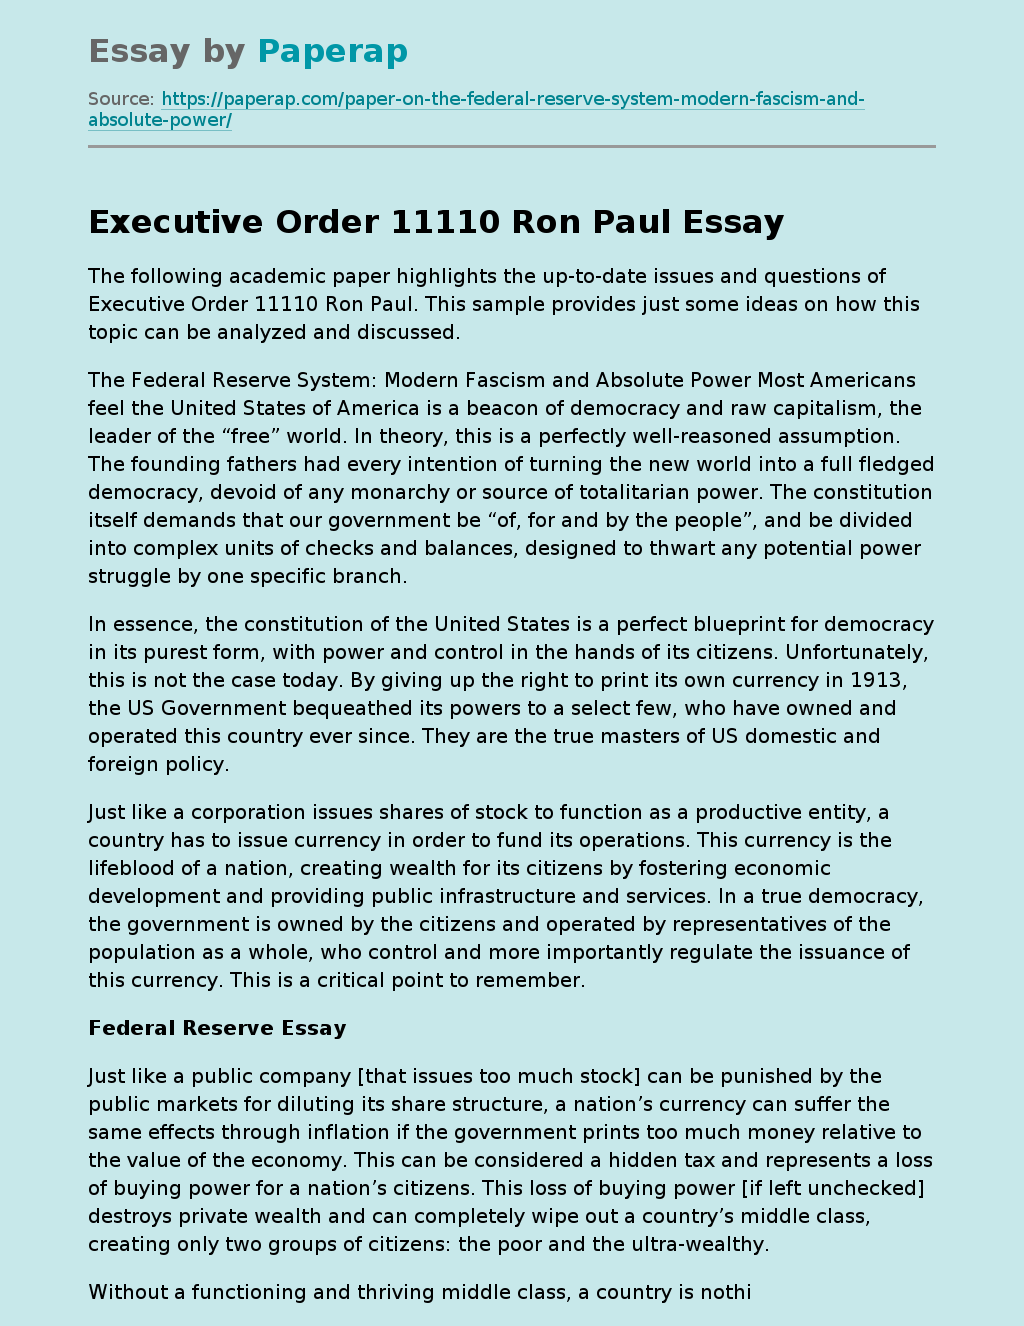 Executive Order 11110 Ron Paul